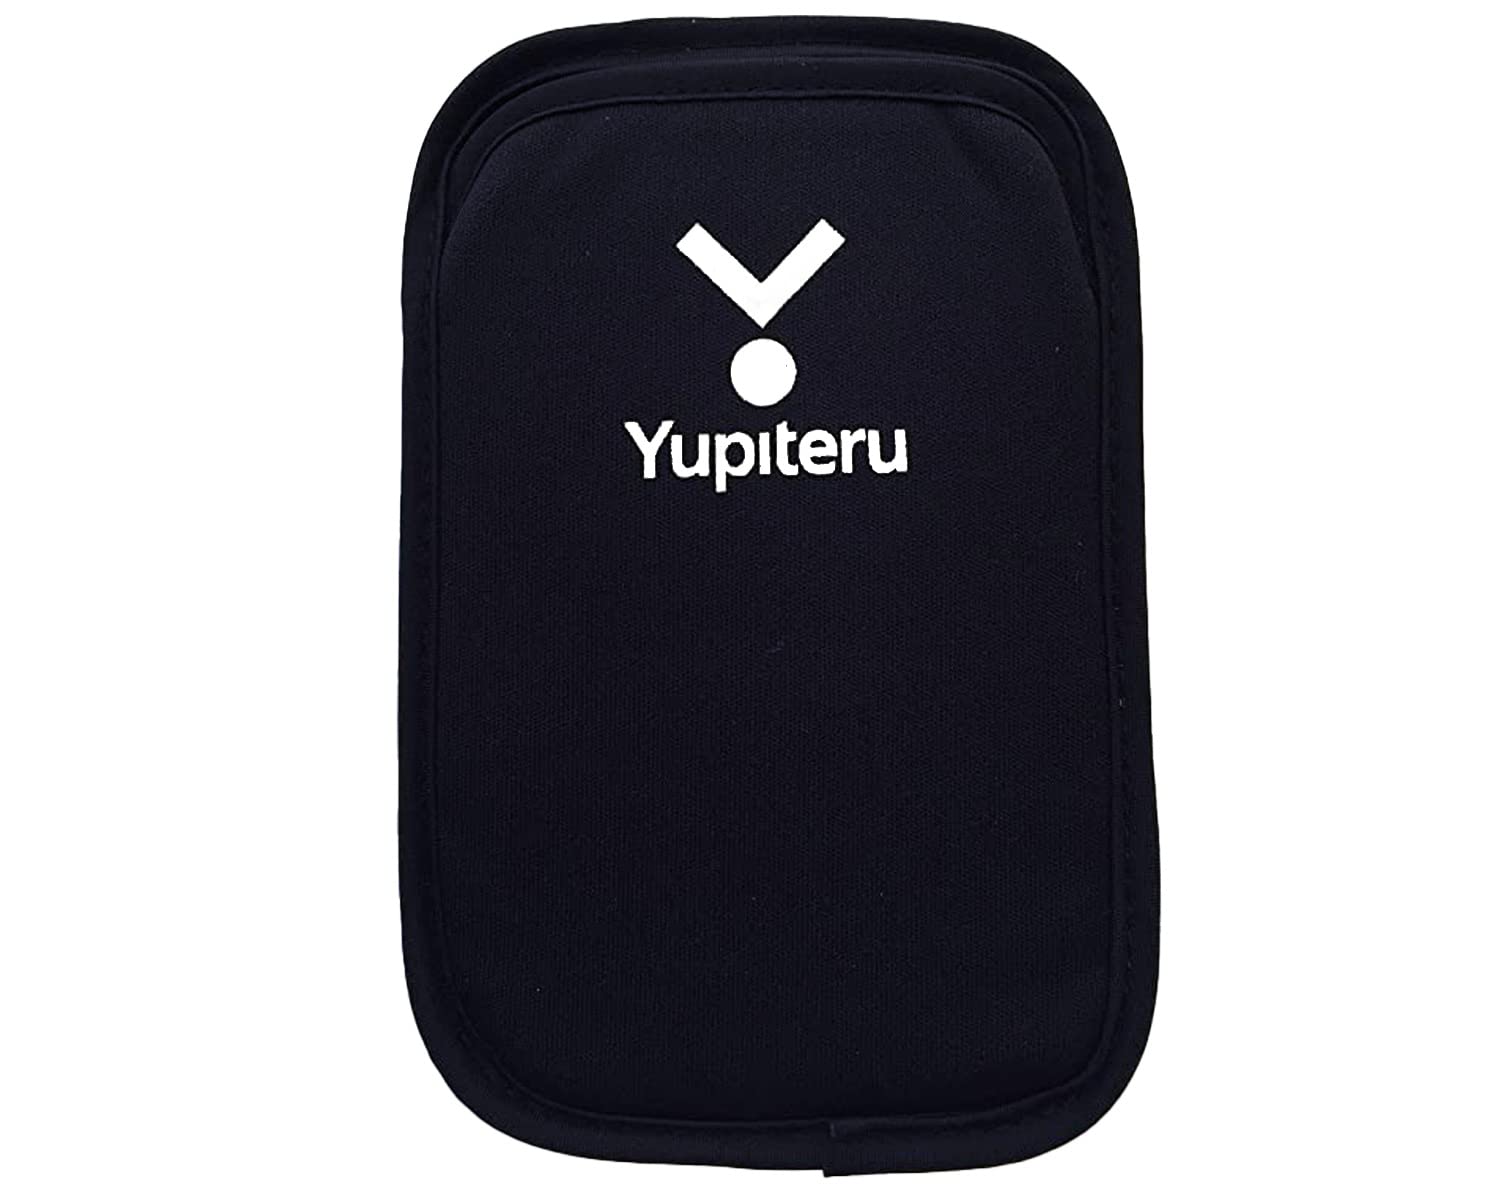 YUPITERU ユピテル ベルトホルダー兼用キャリングケース 中型 OP-A038 ソフト生地 本体保護 落下 傷防止 スマートフォンサイズ